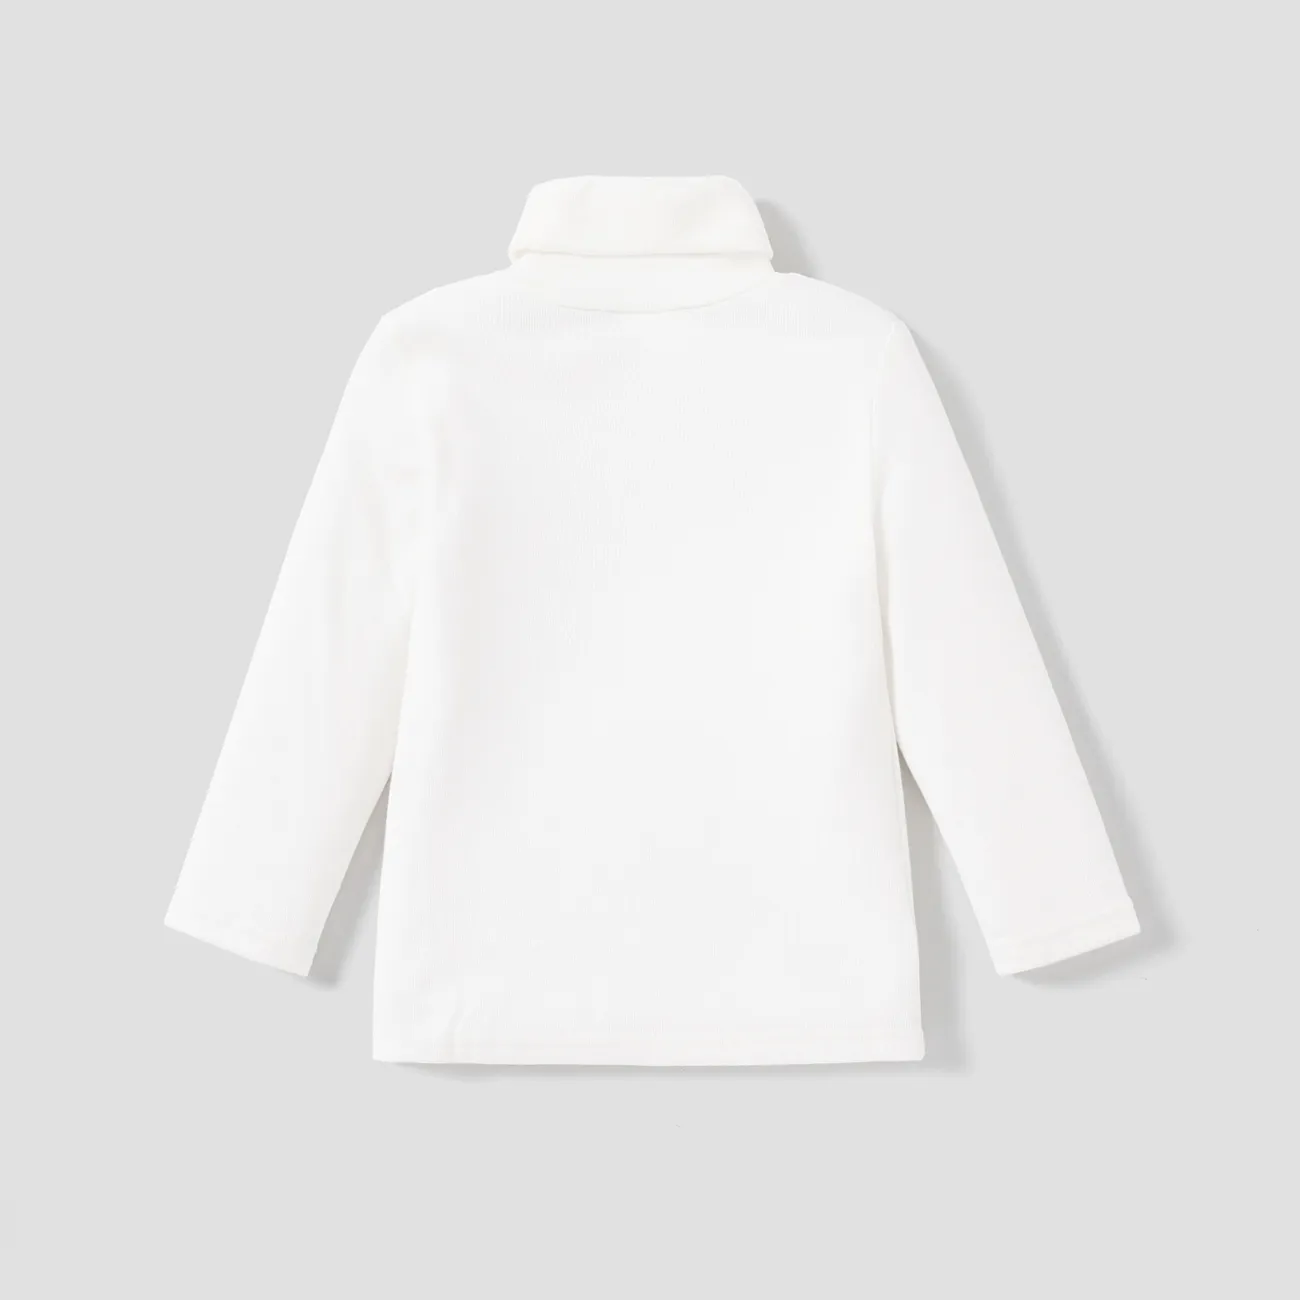 Toddler Girl/Boy Turtleneck Cashmere Solid Knit Sweater White big image 1